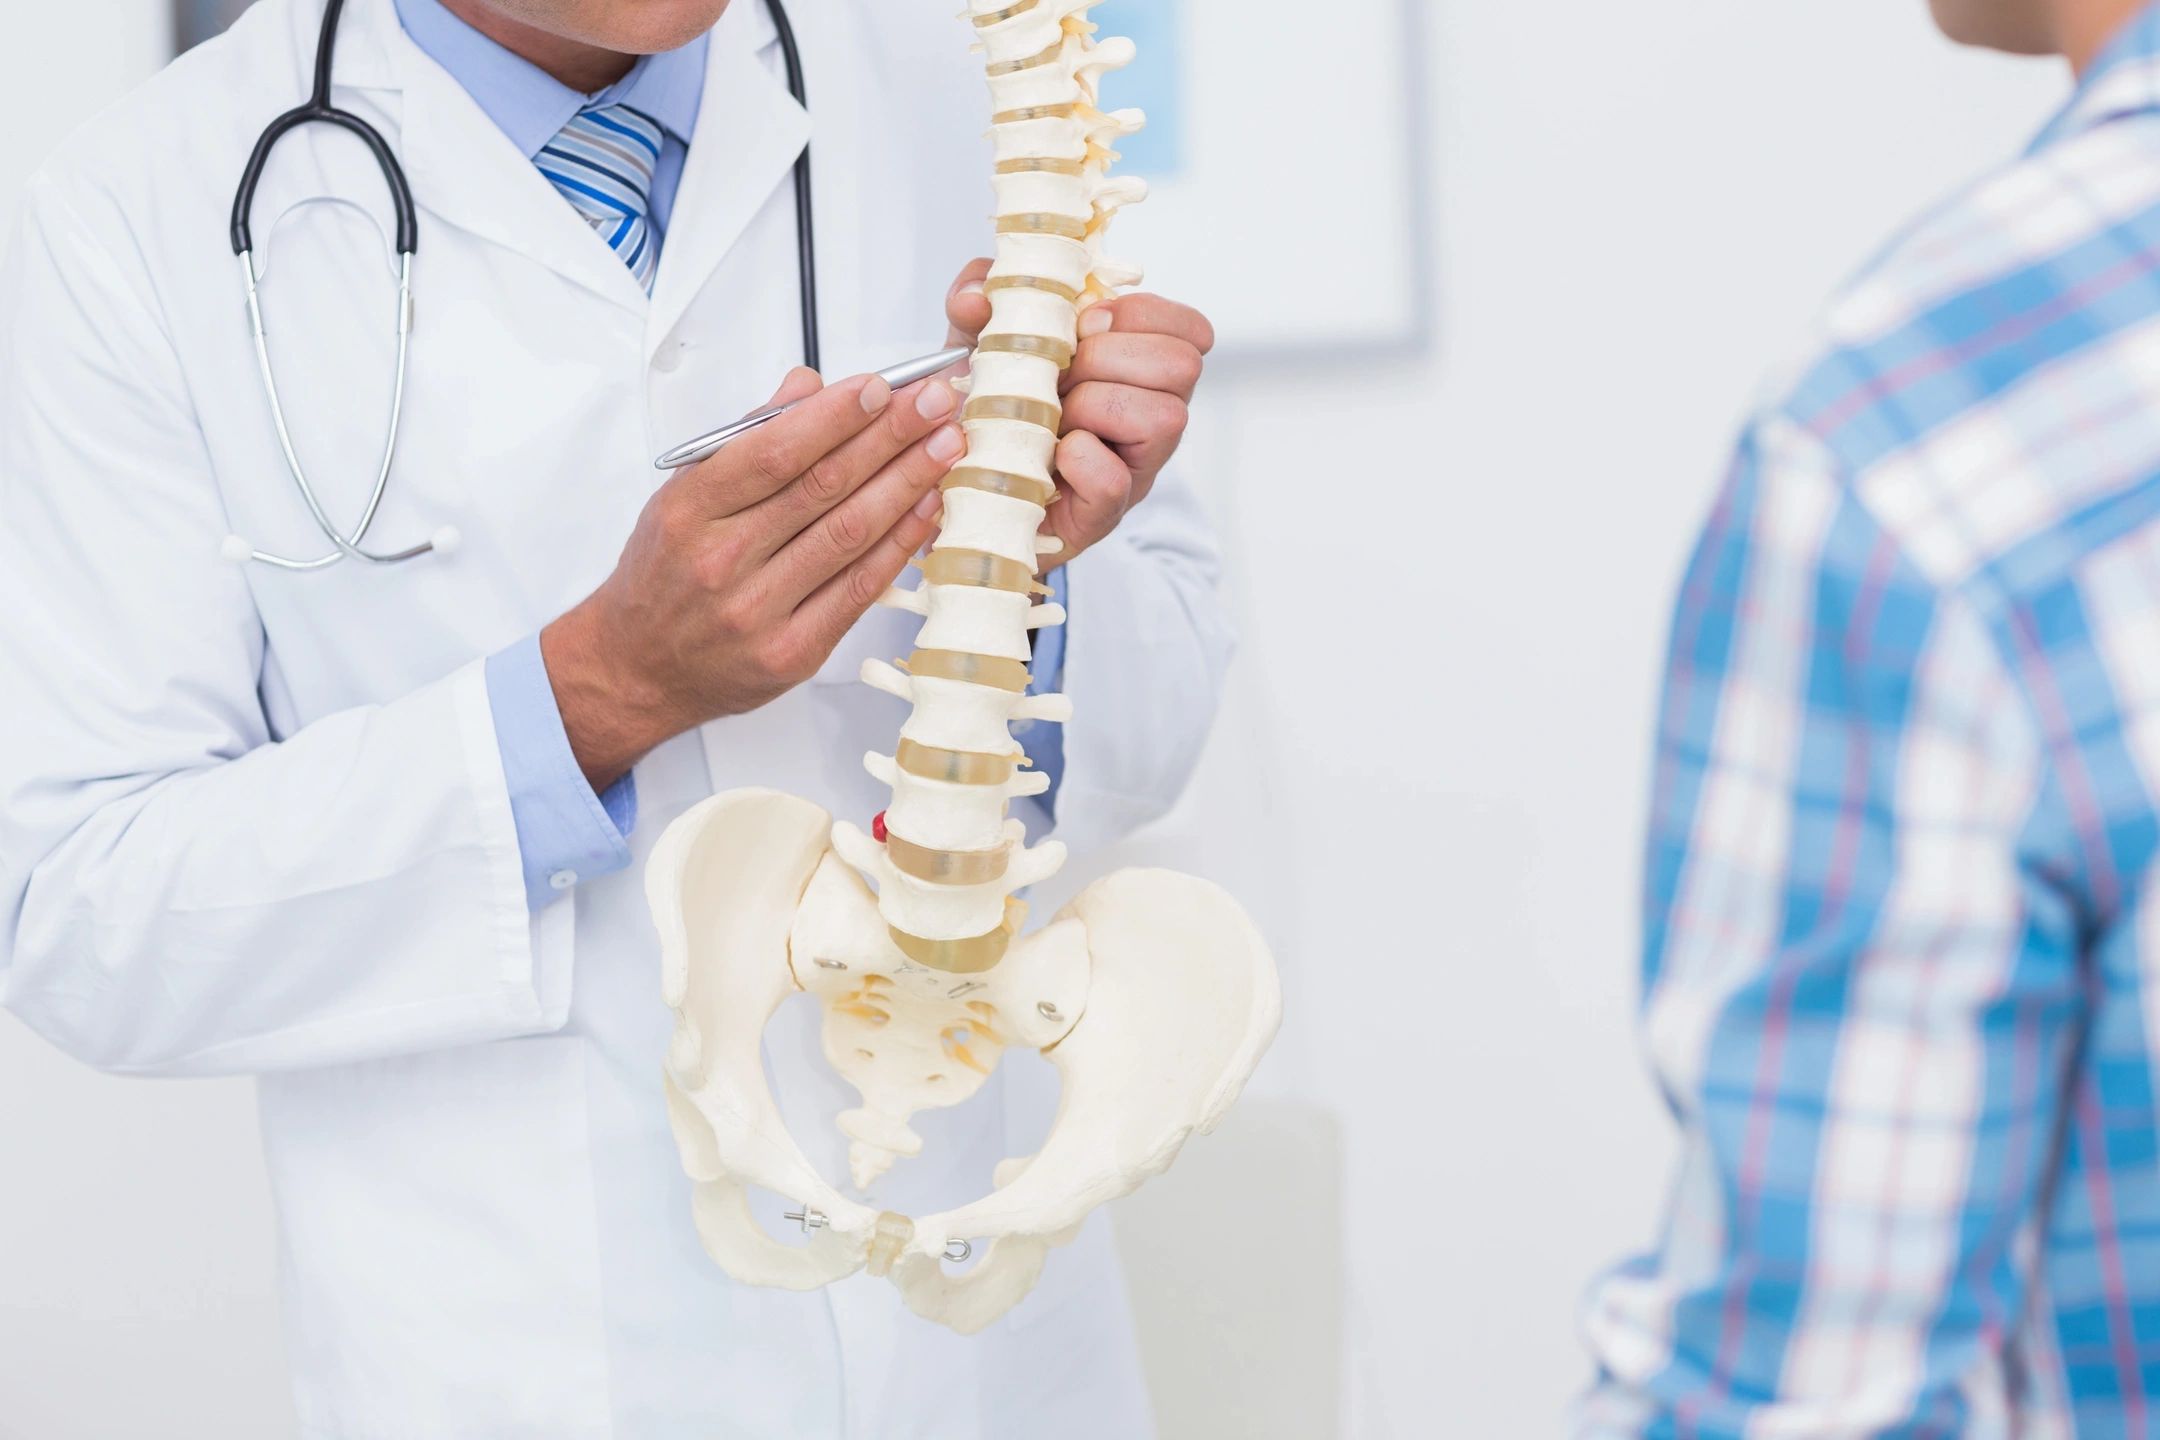 Chiropractor holding spine model